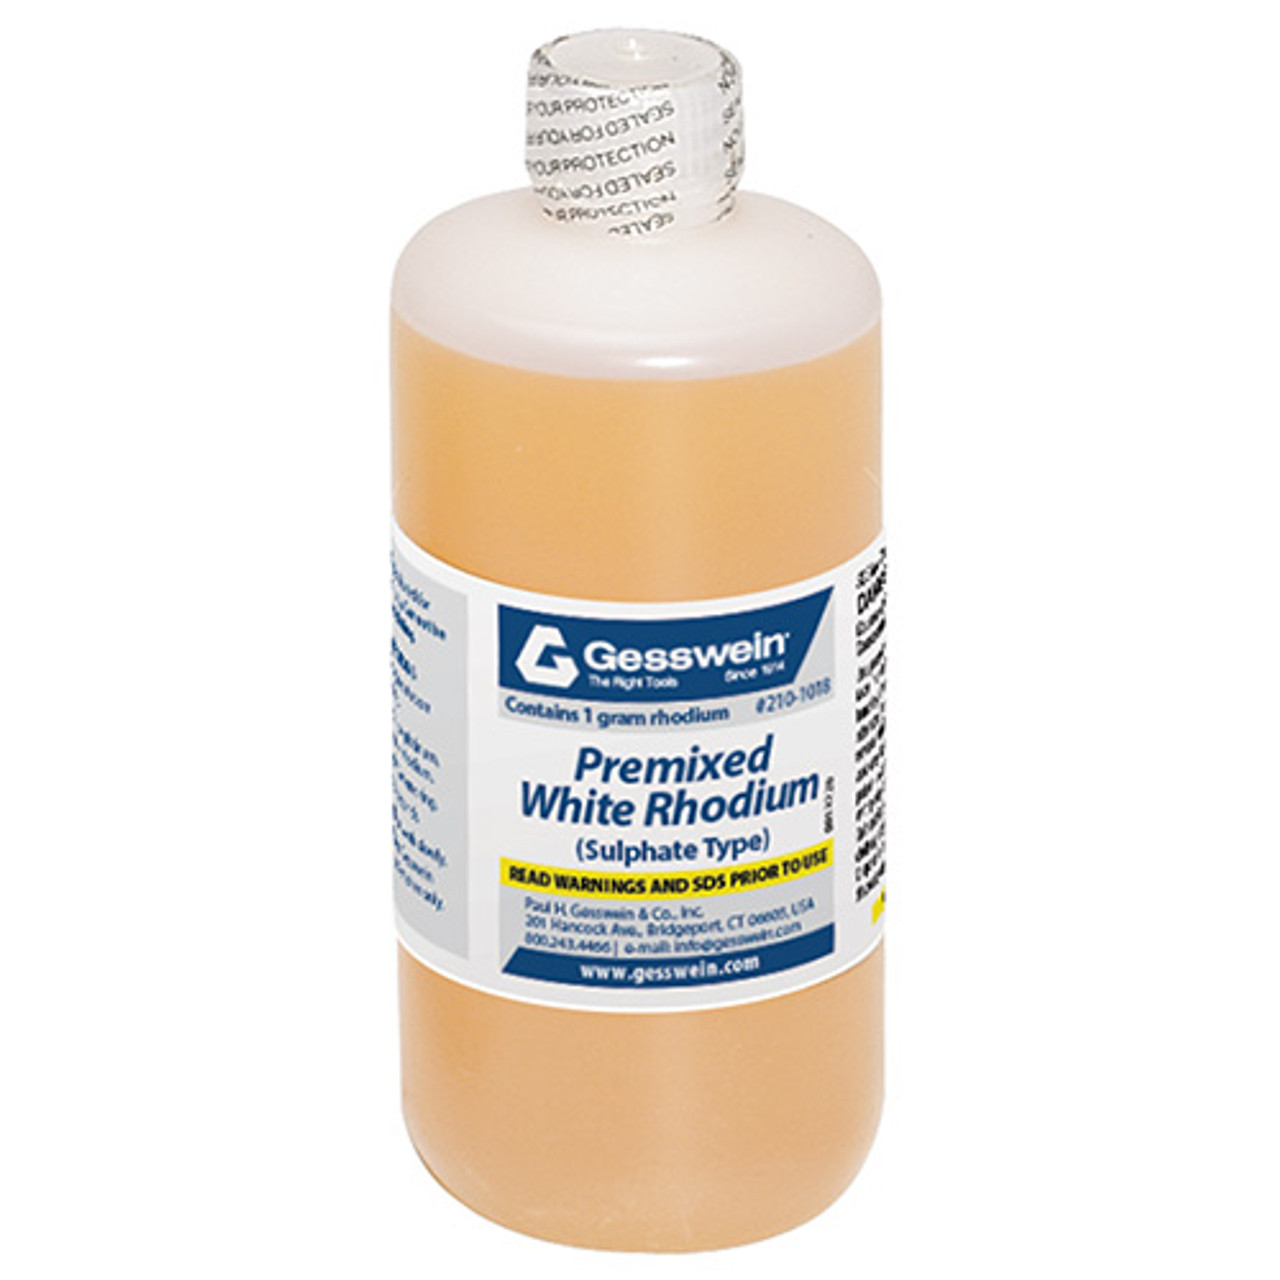 Gesswein® White Rhodium Premixed Bath Solution – 1 Pint LTD QTY